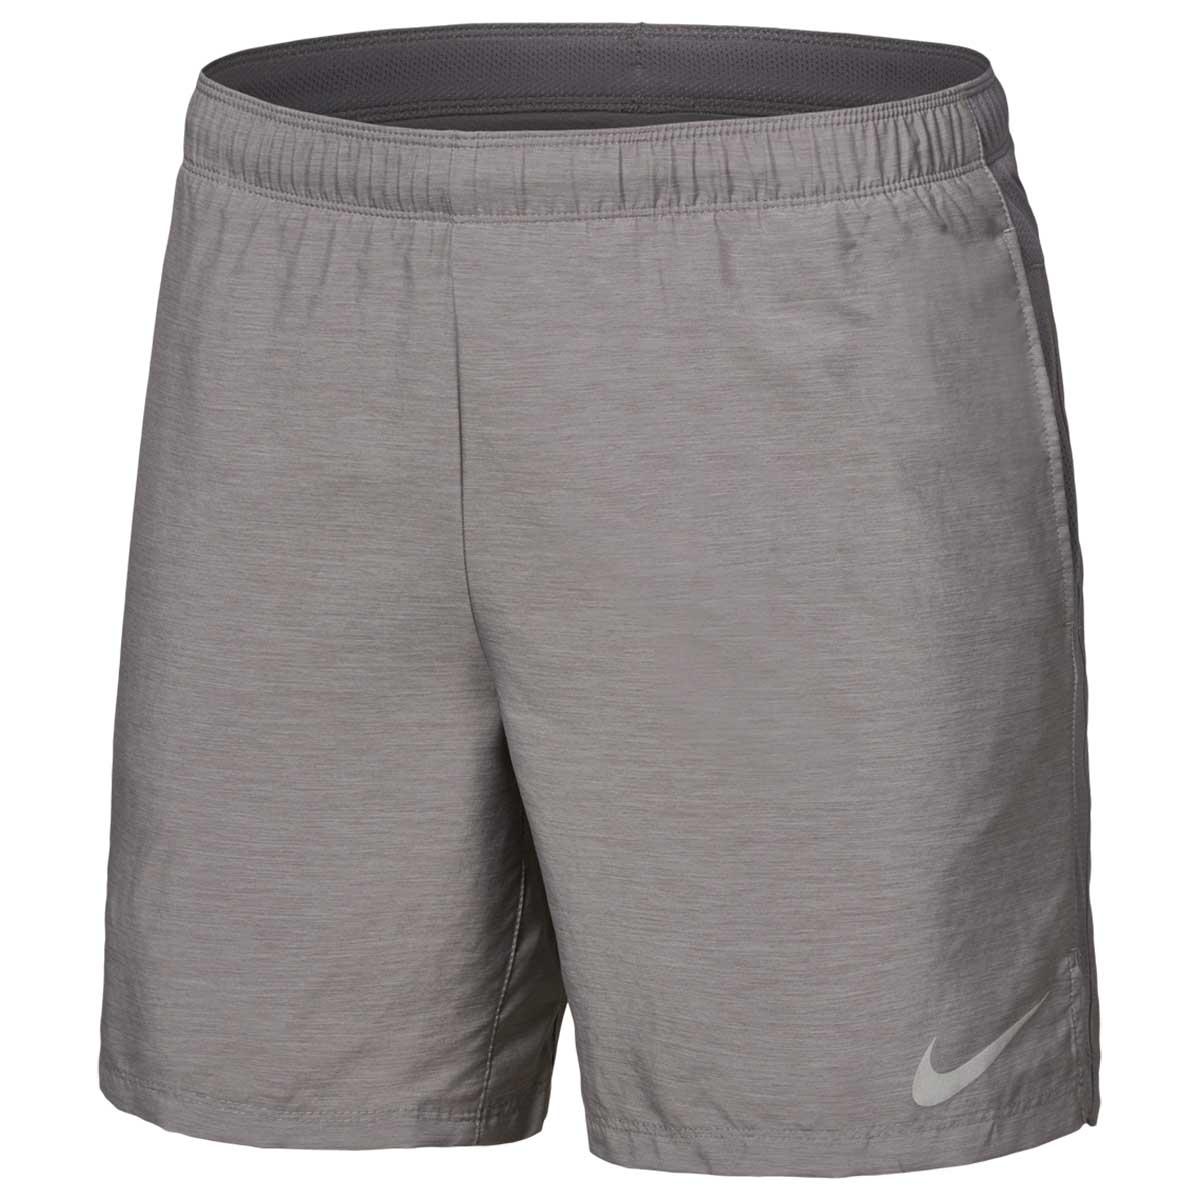 Buy Nike Mens Running Shorts (Grey) Online in India